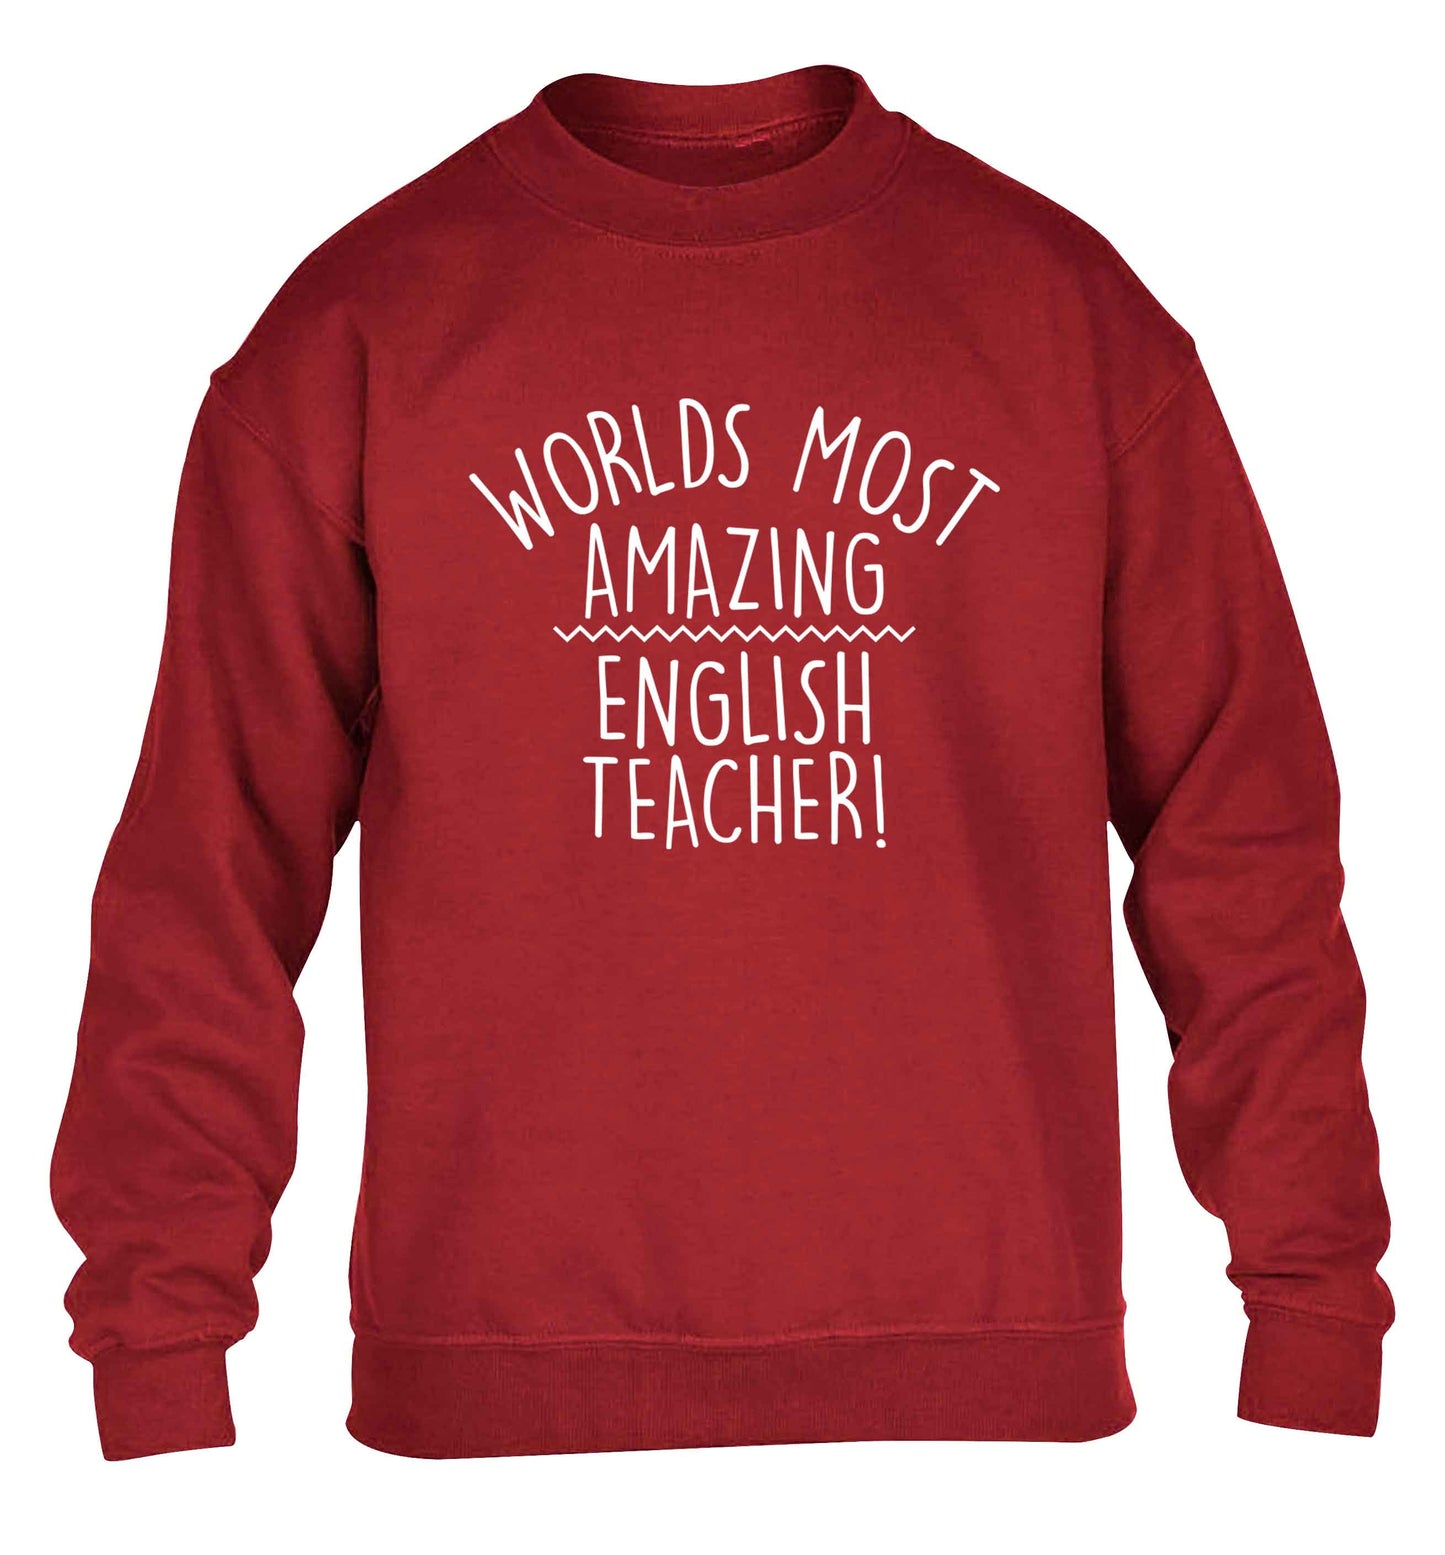 Worlds most amazing English teacher children's grey sweater 12-13 Years